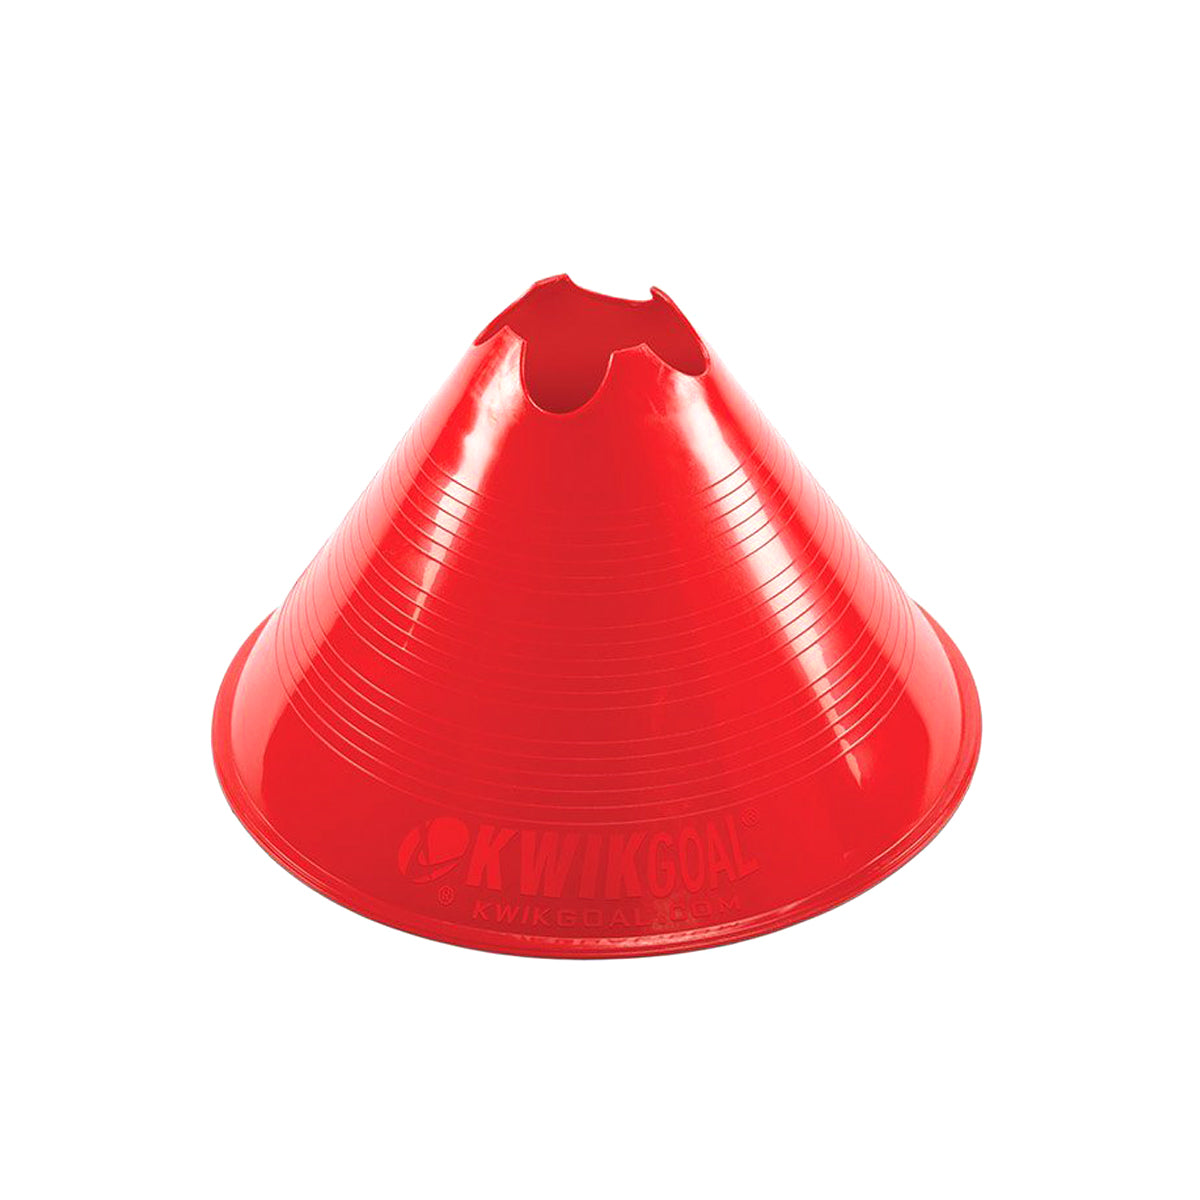 Kwikgoal Jumbo Disc Cones | 6A13 Field equipment Kwikgoal Red 